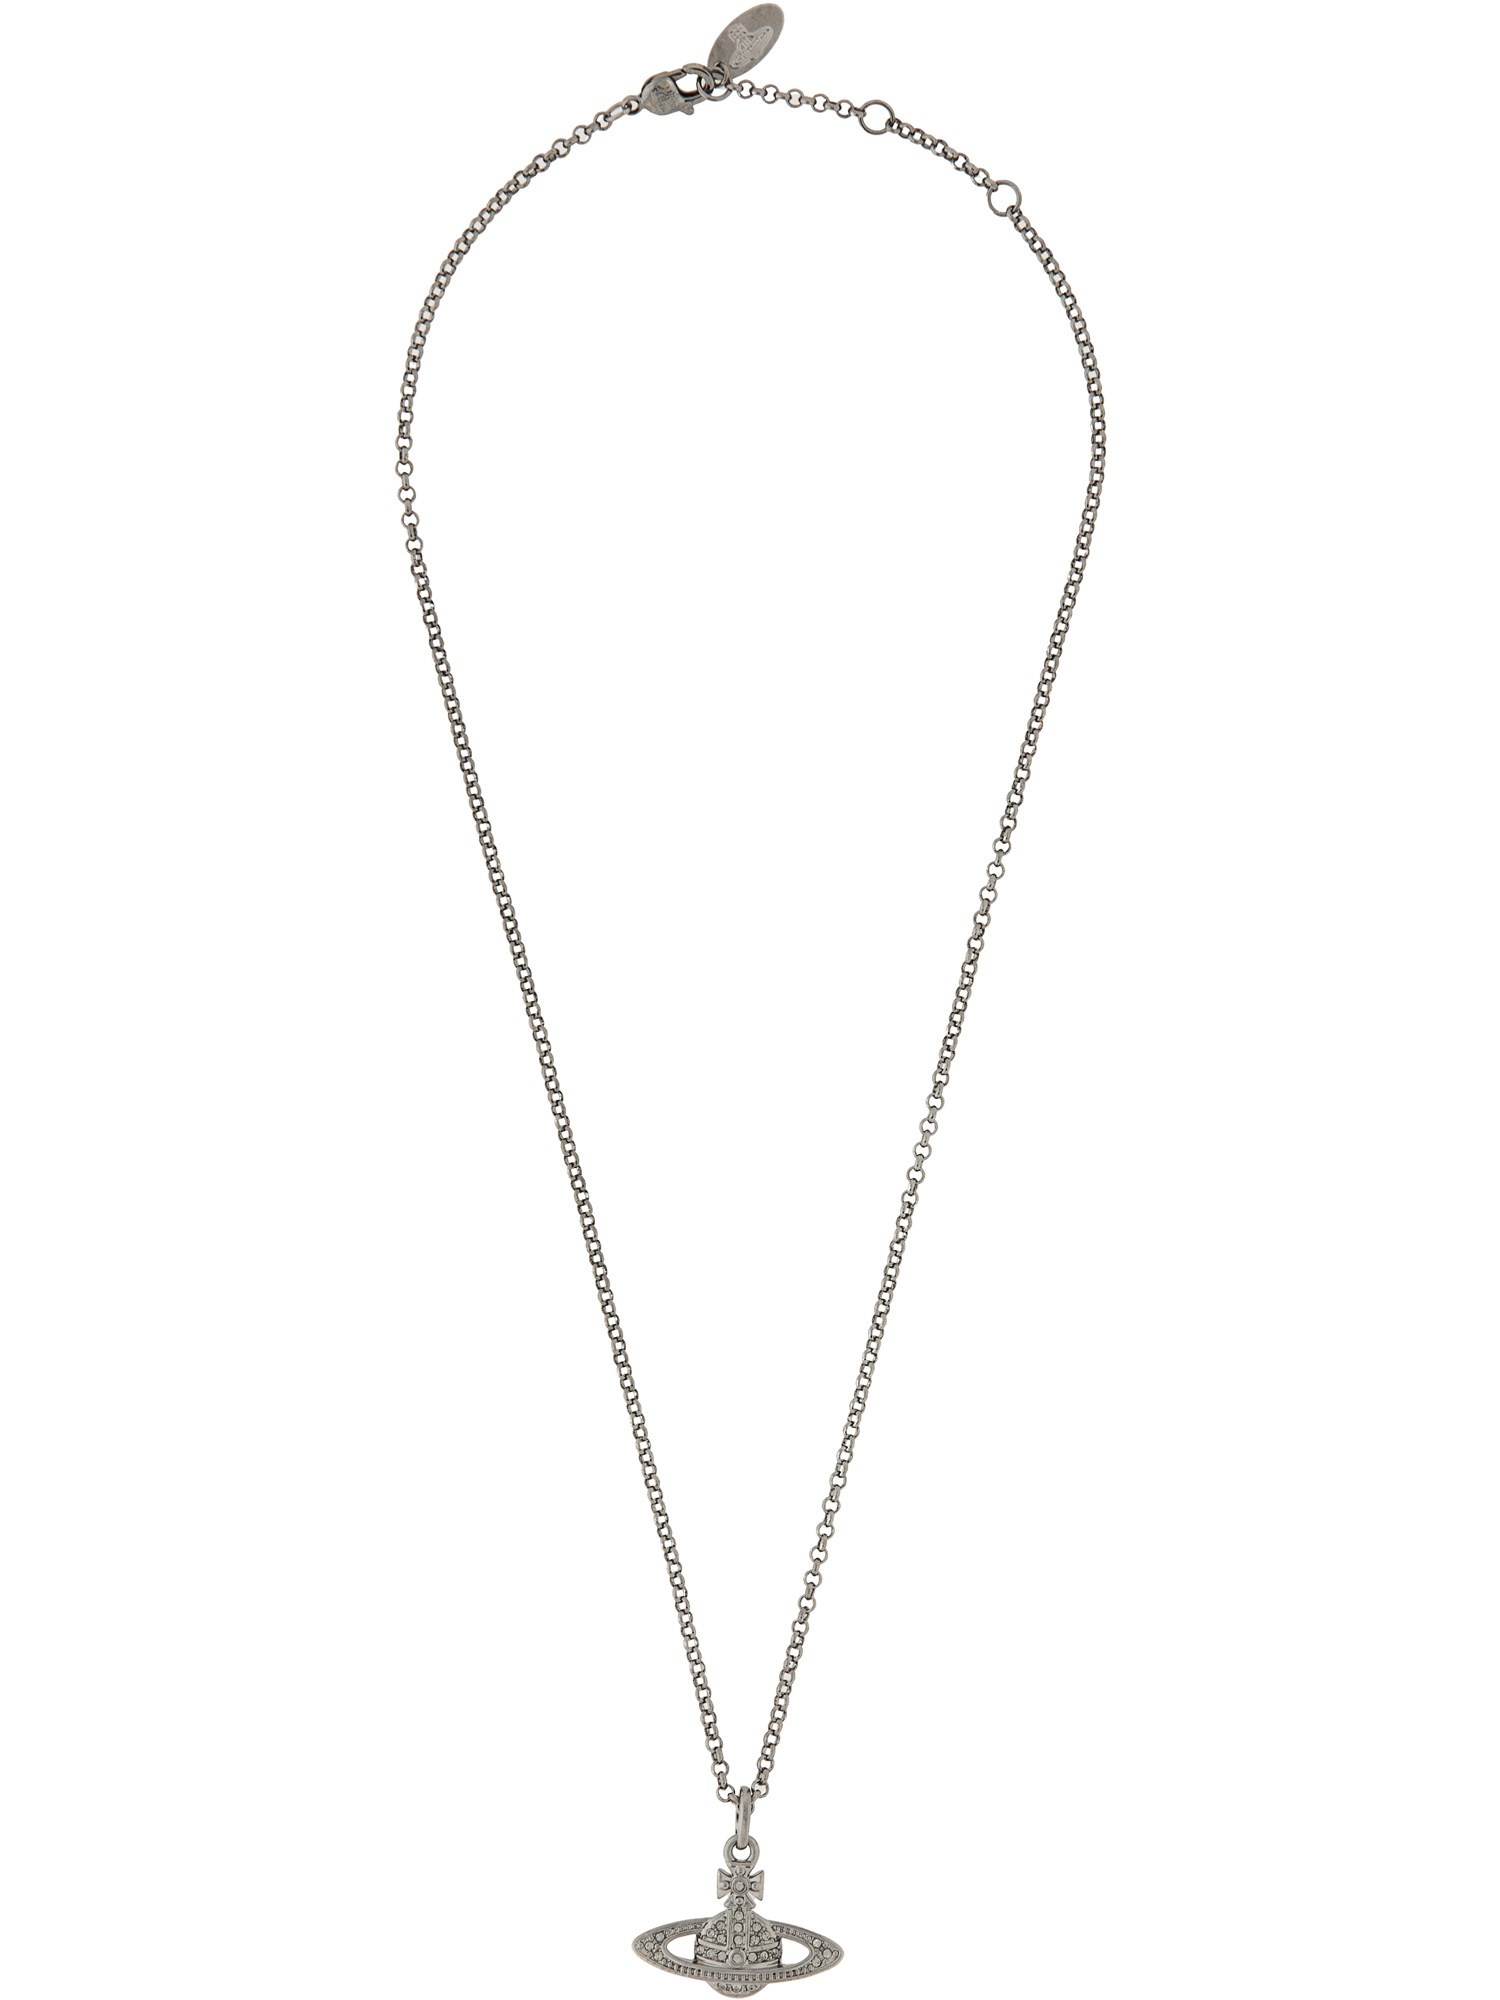 Vivienne Westwood vivienne westwood chain with mini bas relief pendant